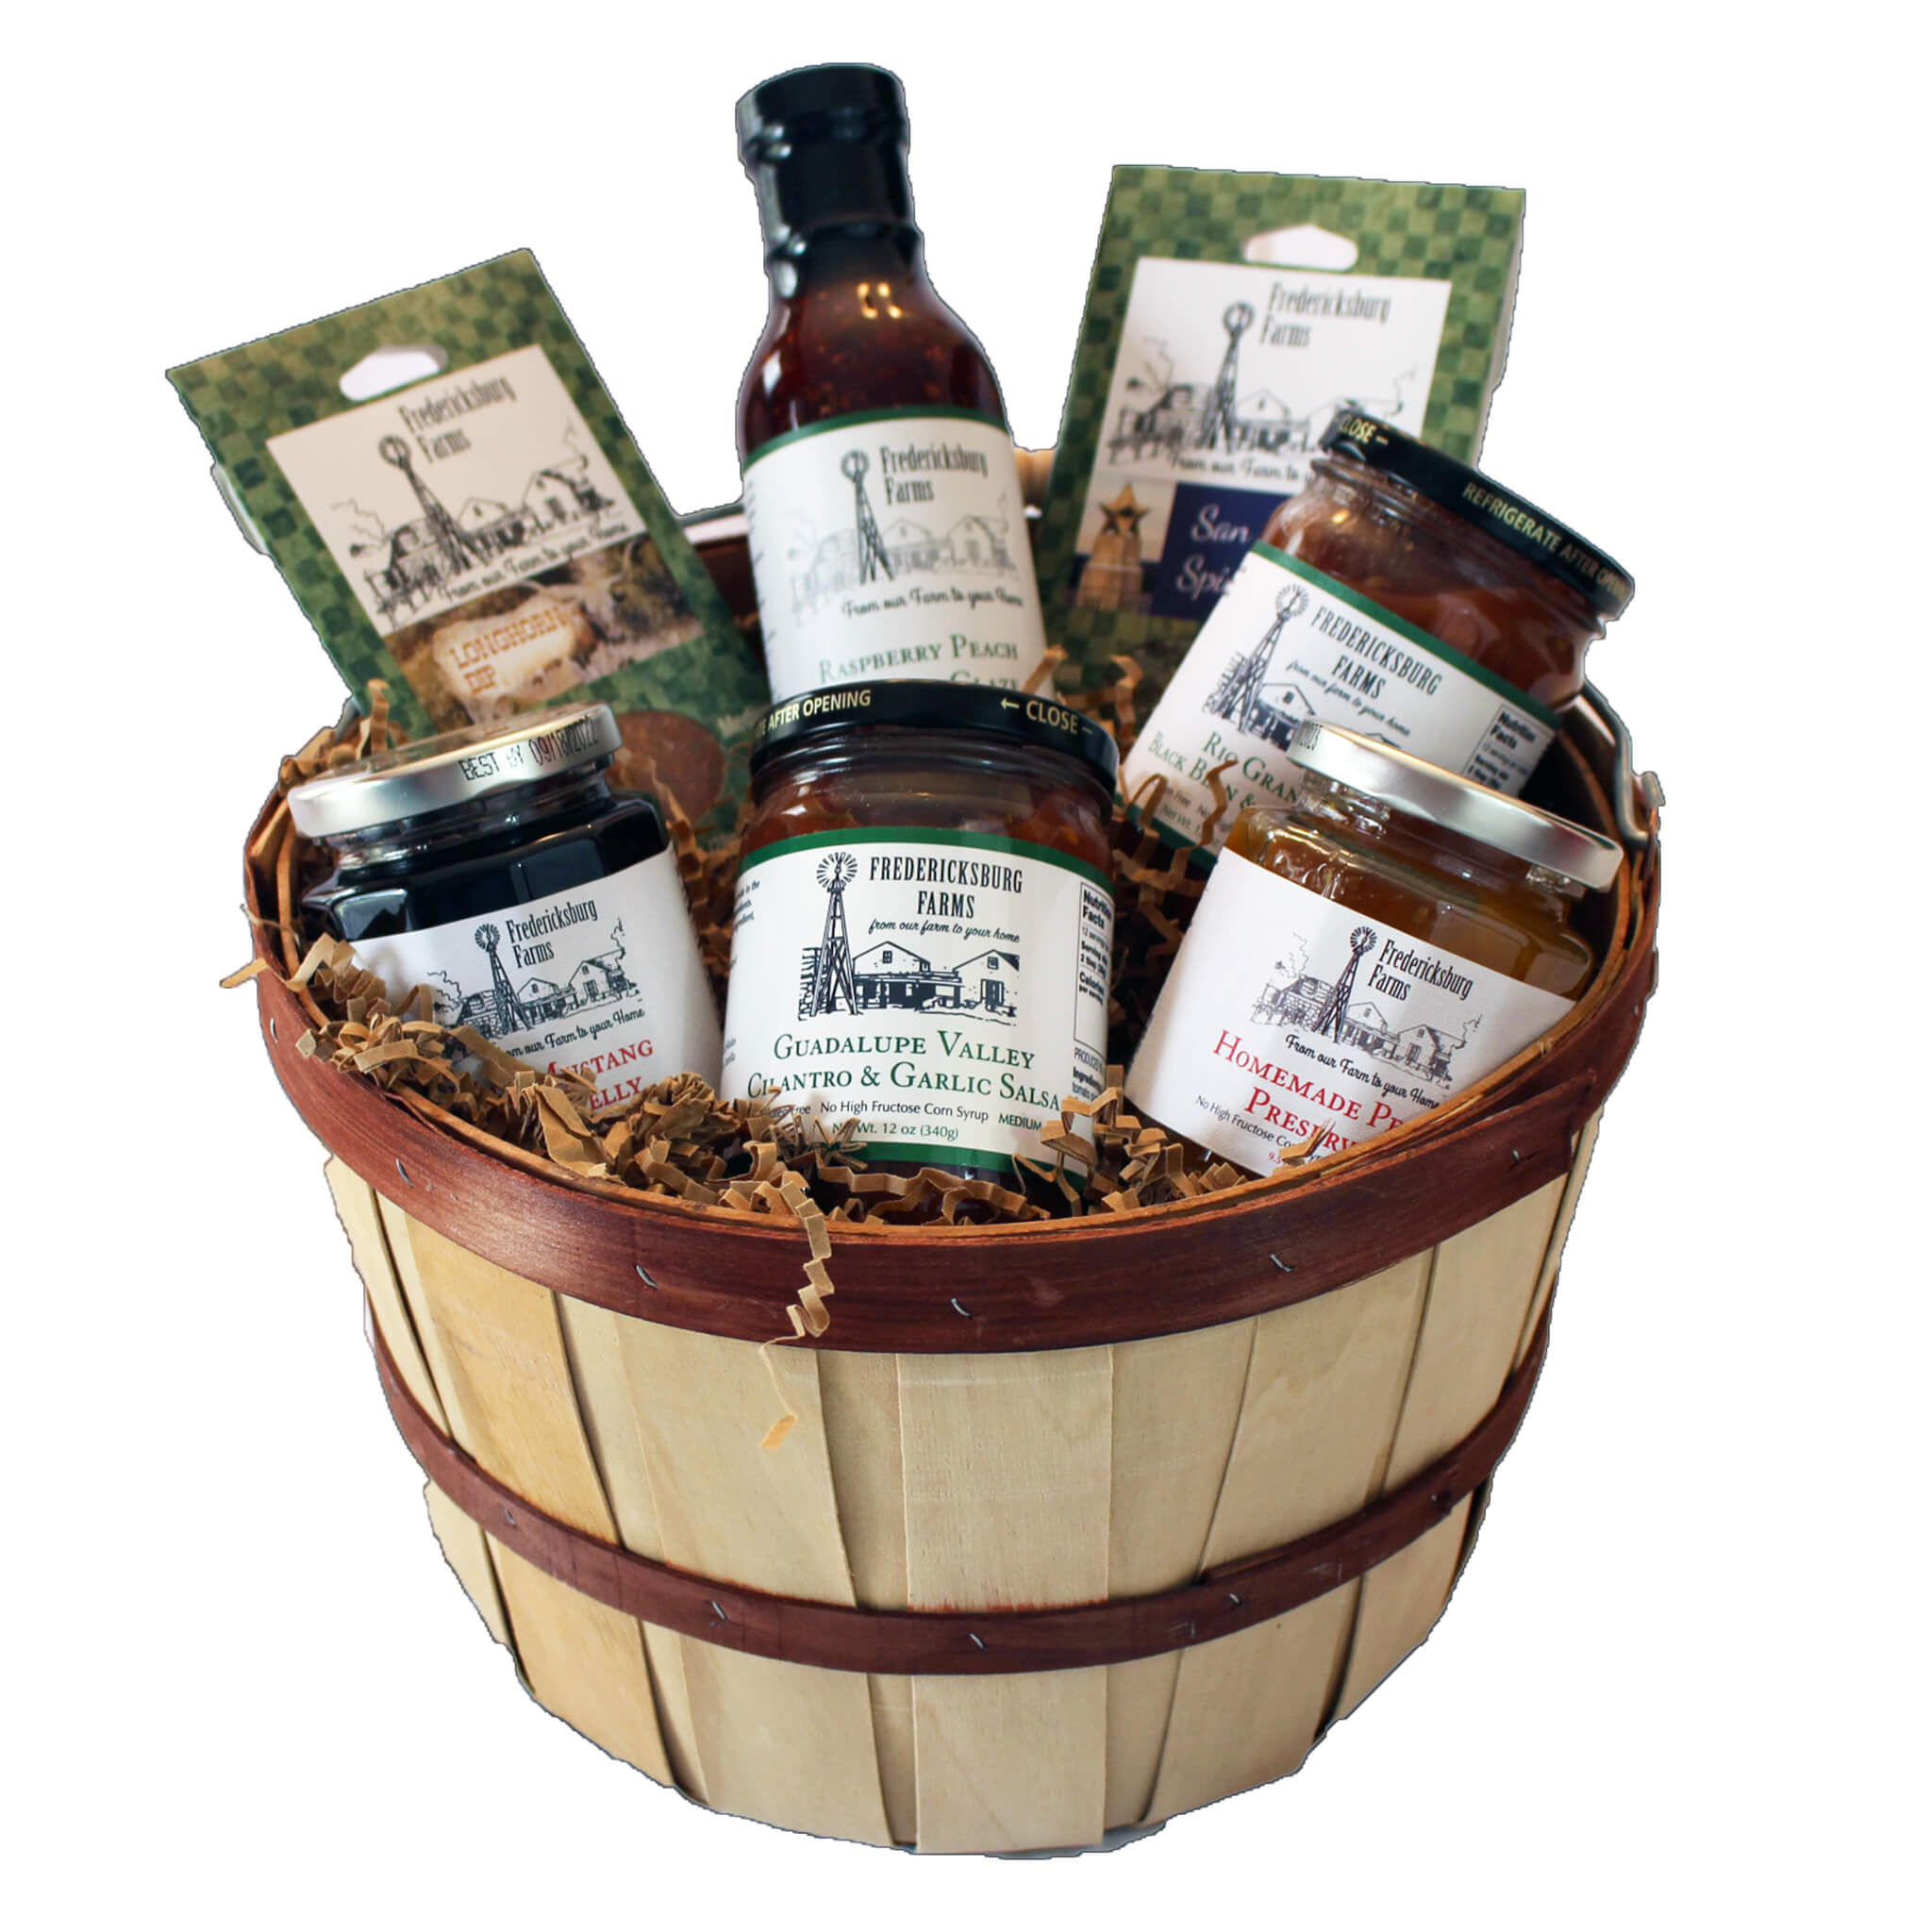 Markham Rustic Wine Gift Basket - wine gift baskets - USA delivery